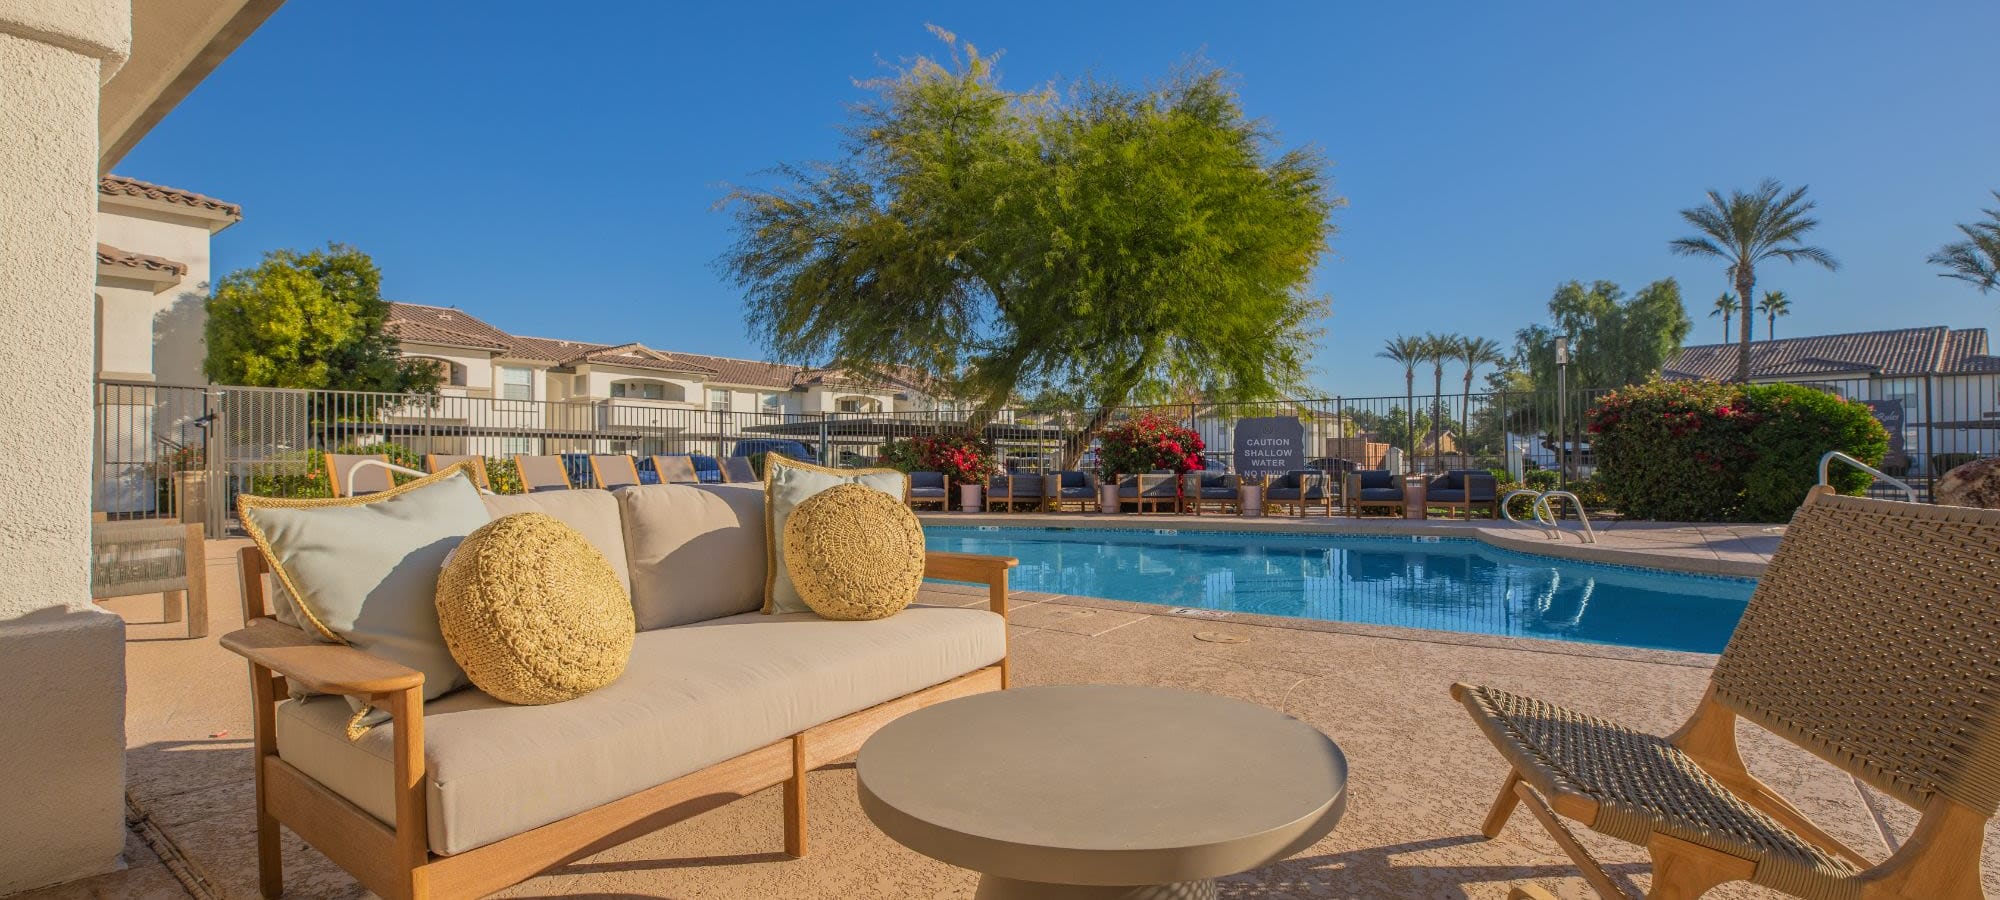 Poolside lounge seating at Soleil in Chandler, Arizona